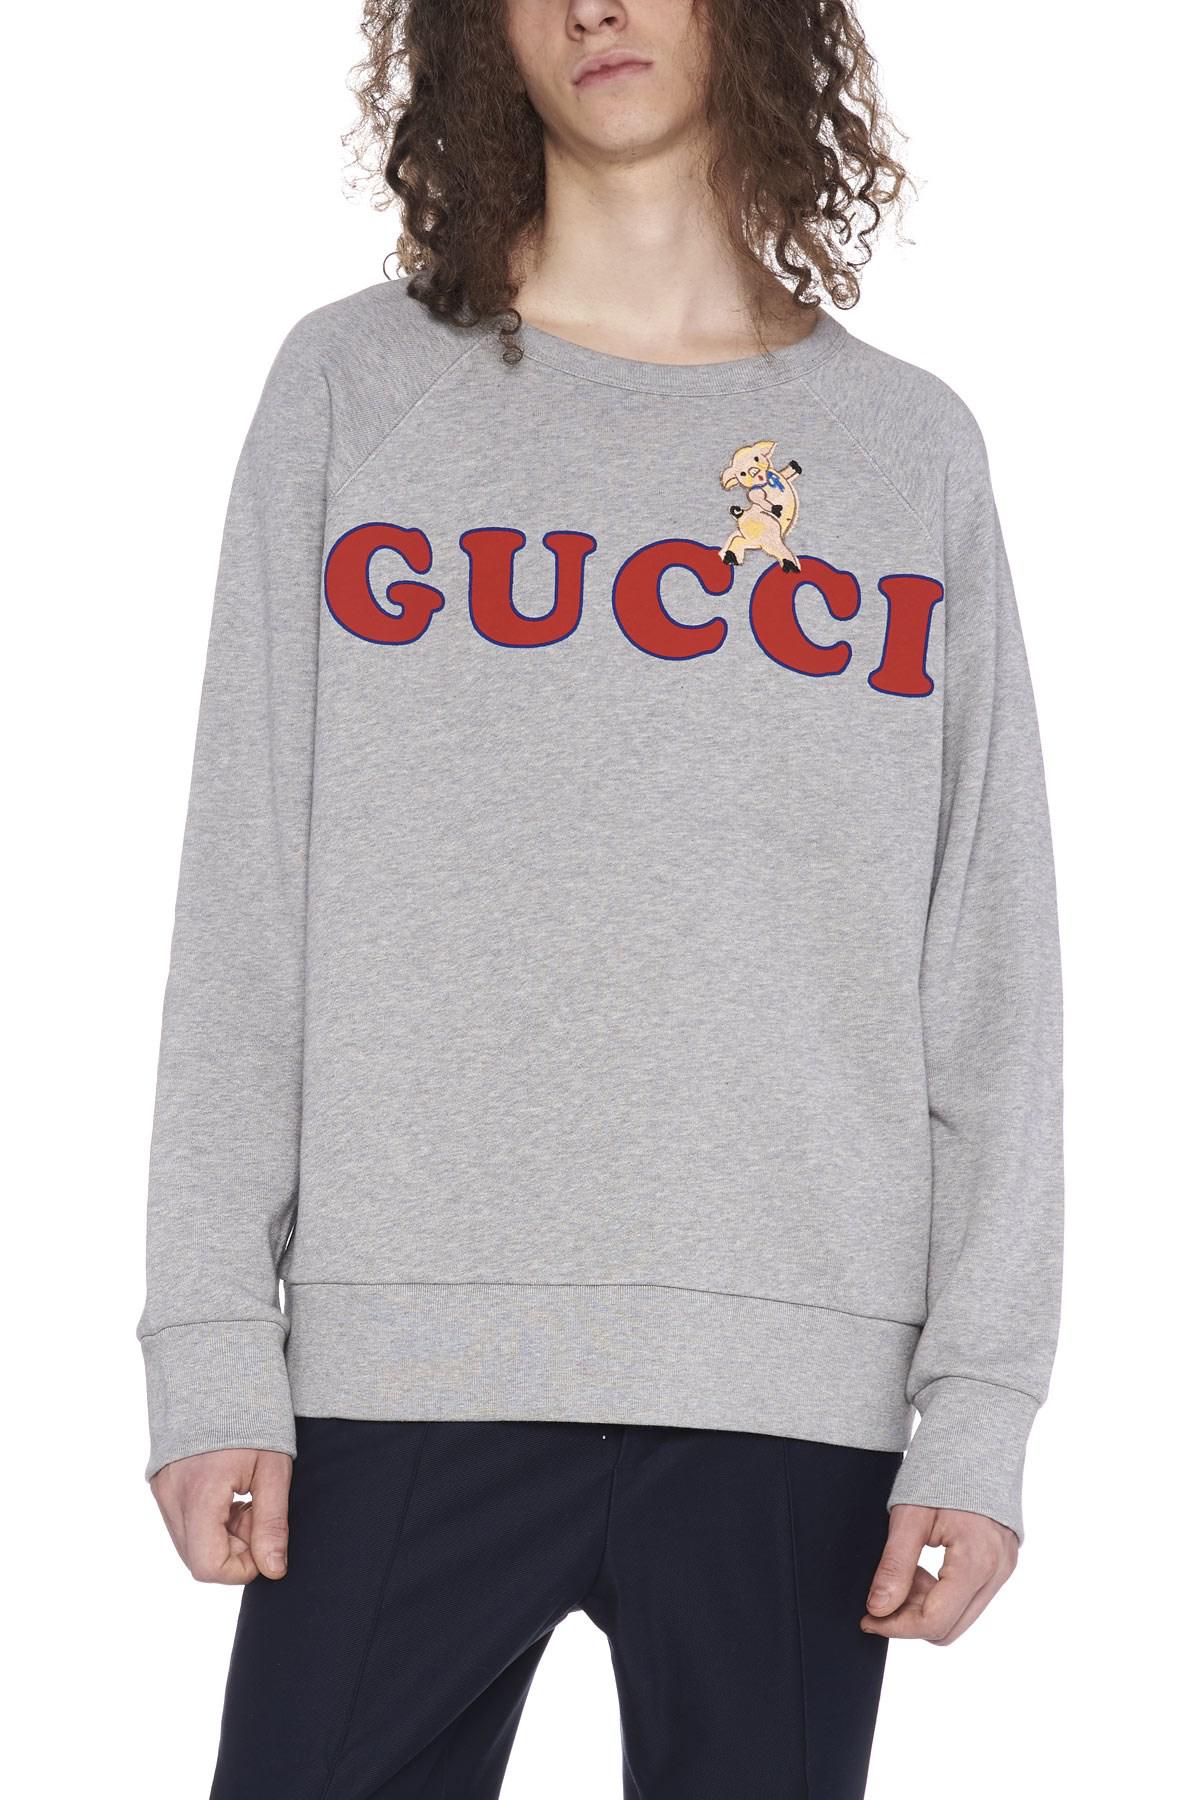 gucci sweatshirt with piglet